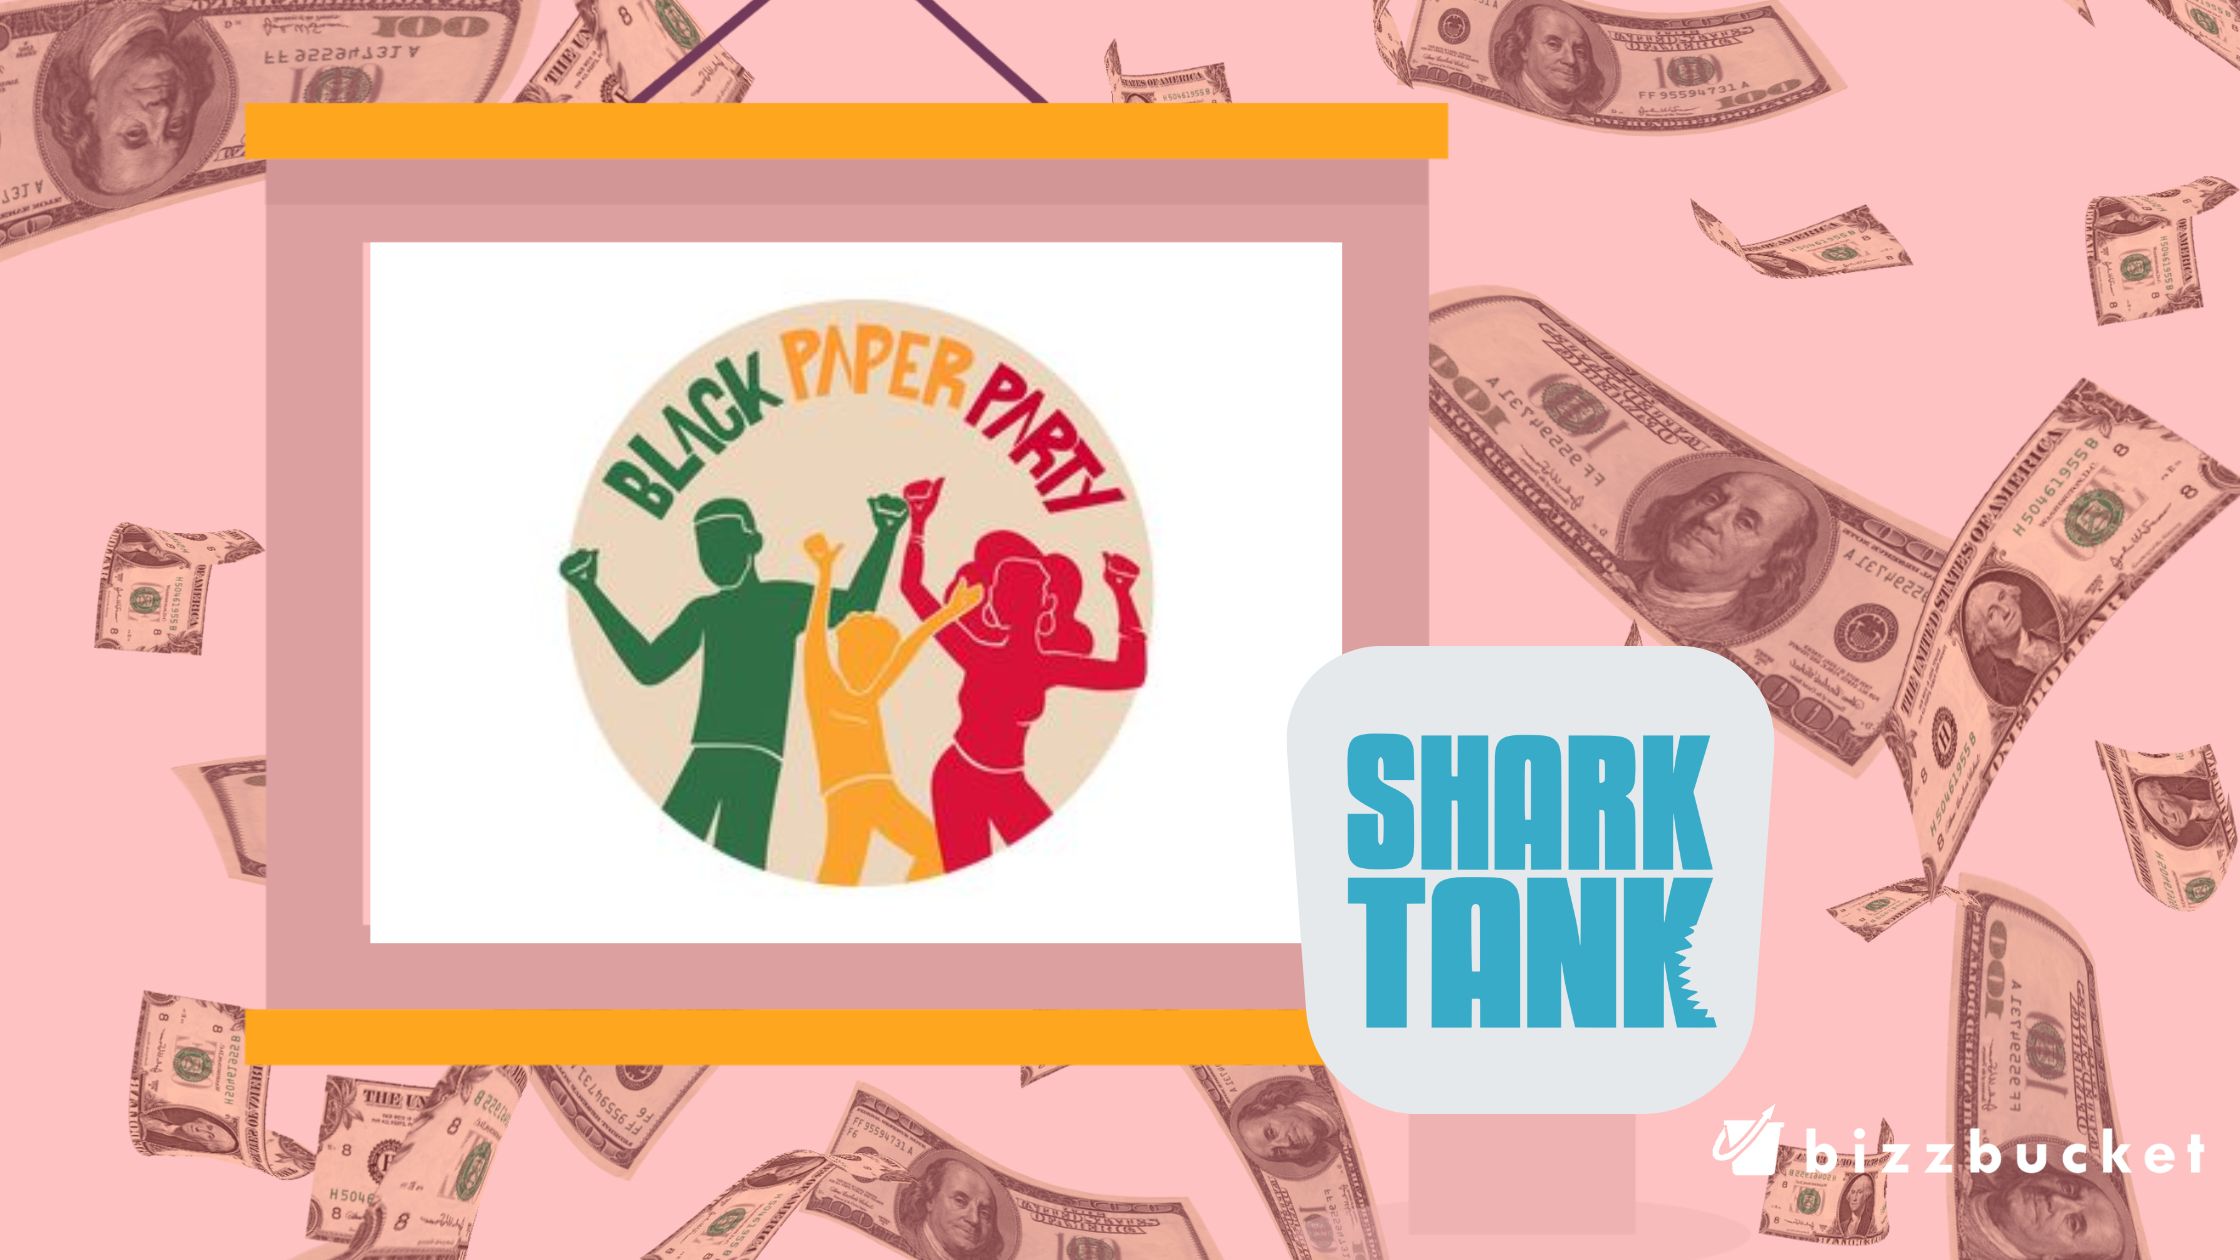 Black Paper Party shark tank